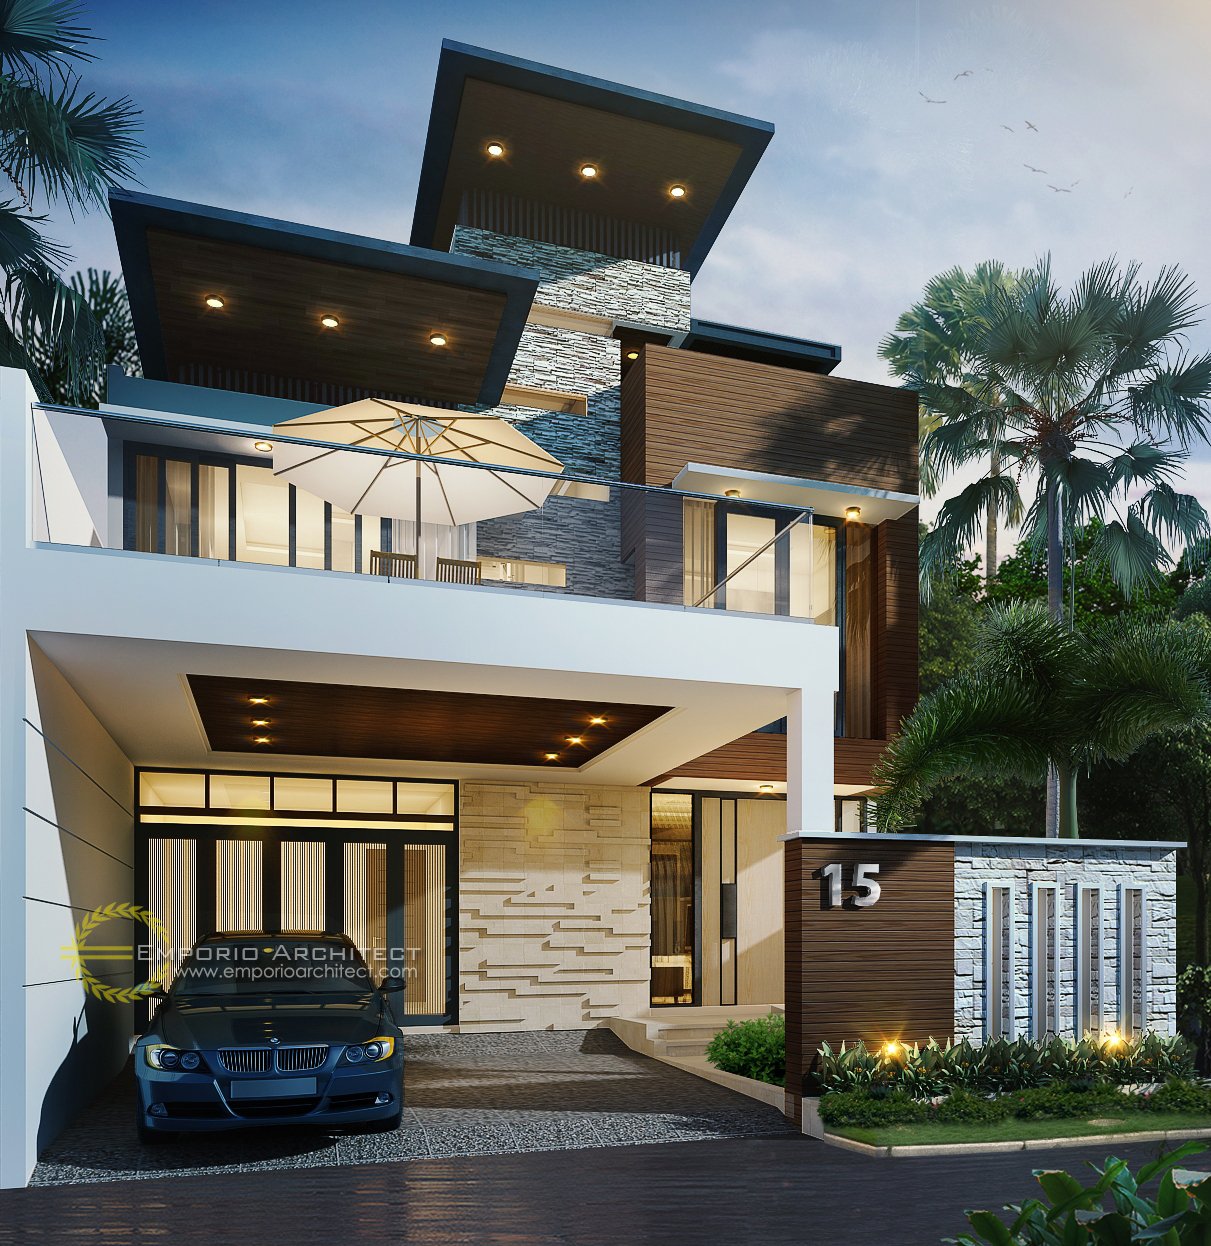 Emporio Architect on Twitter: "Desain Rumah Bapak Riyanto di Bogor